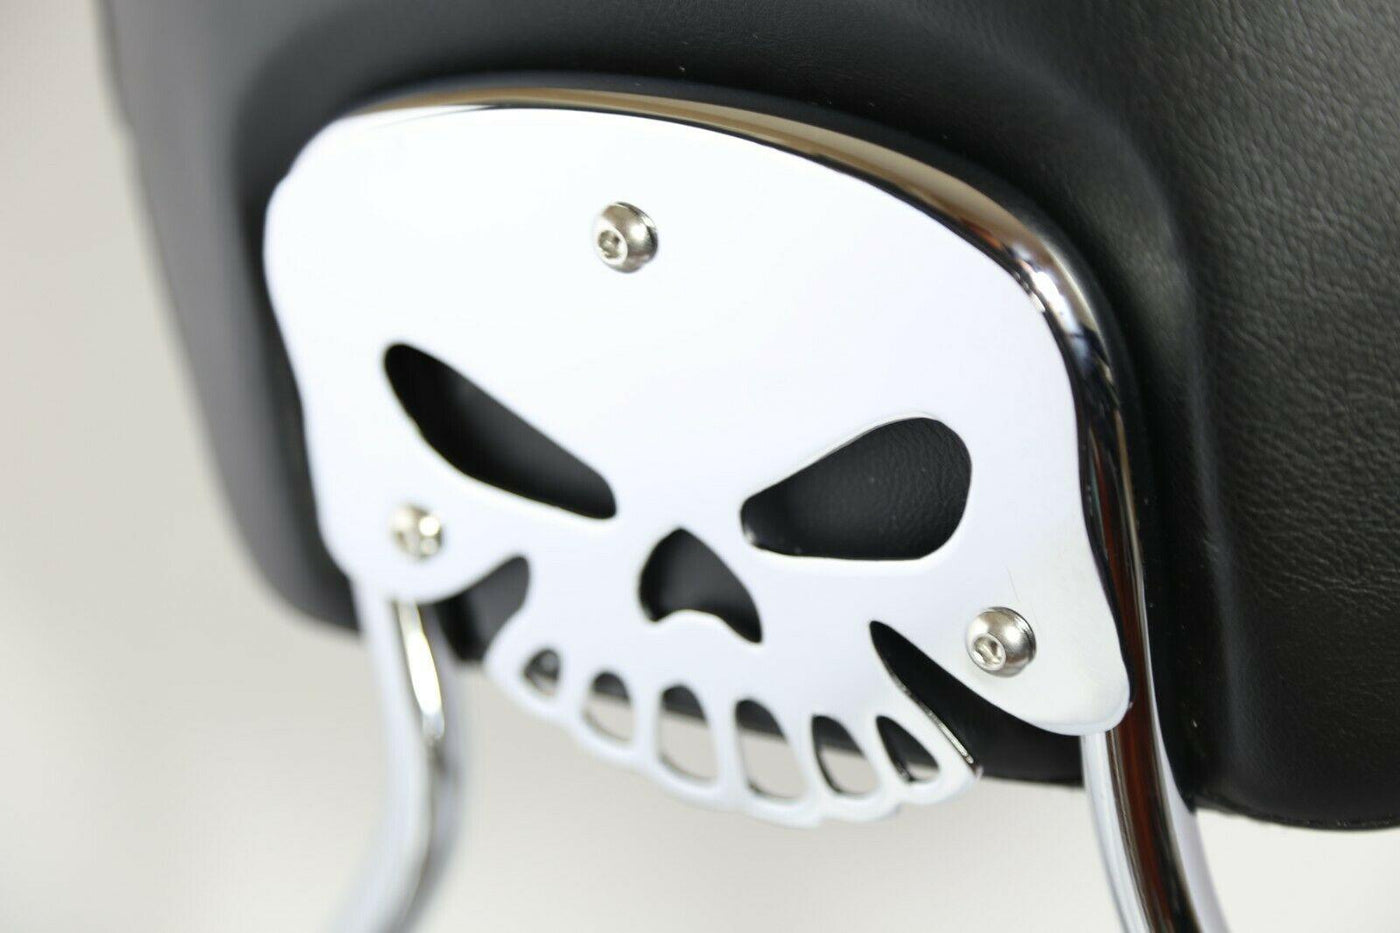 HD Sissy Bar Backrest Chrome Mount Kit Bracket Plate Skull Shaped for Harley - Moto Life Products